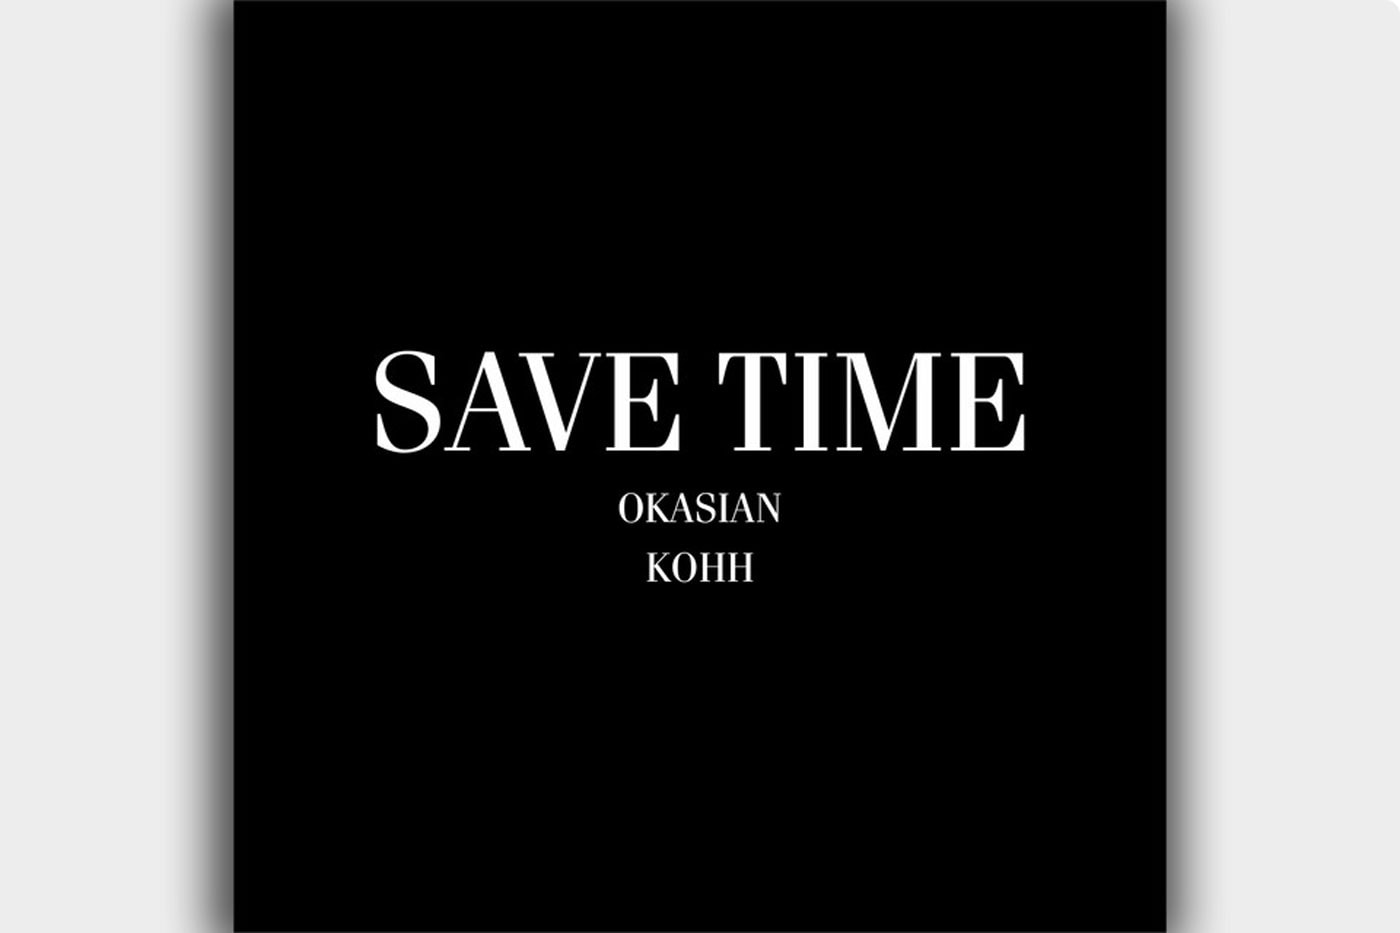 "It G Ma" Artists Okasian & KOHH Reunite For "Save Time"